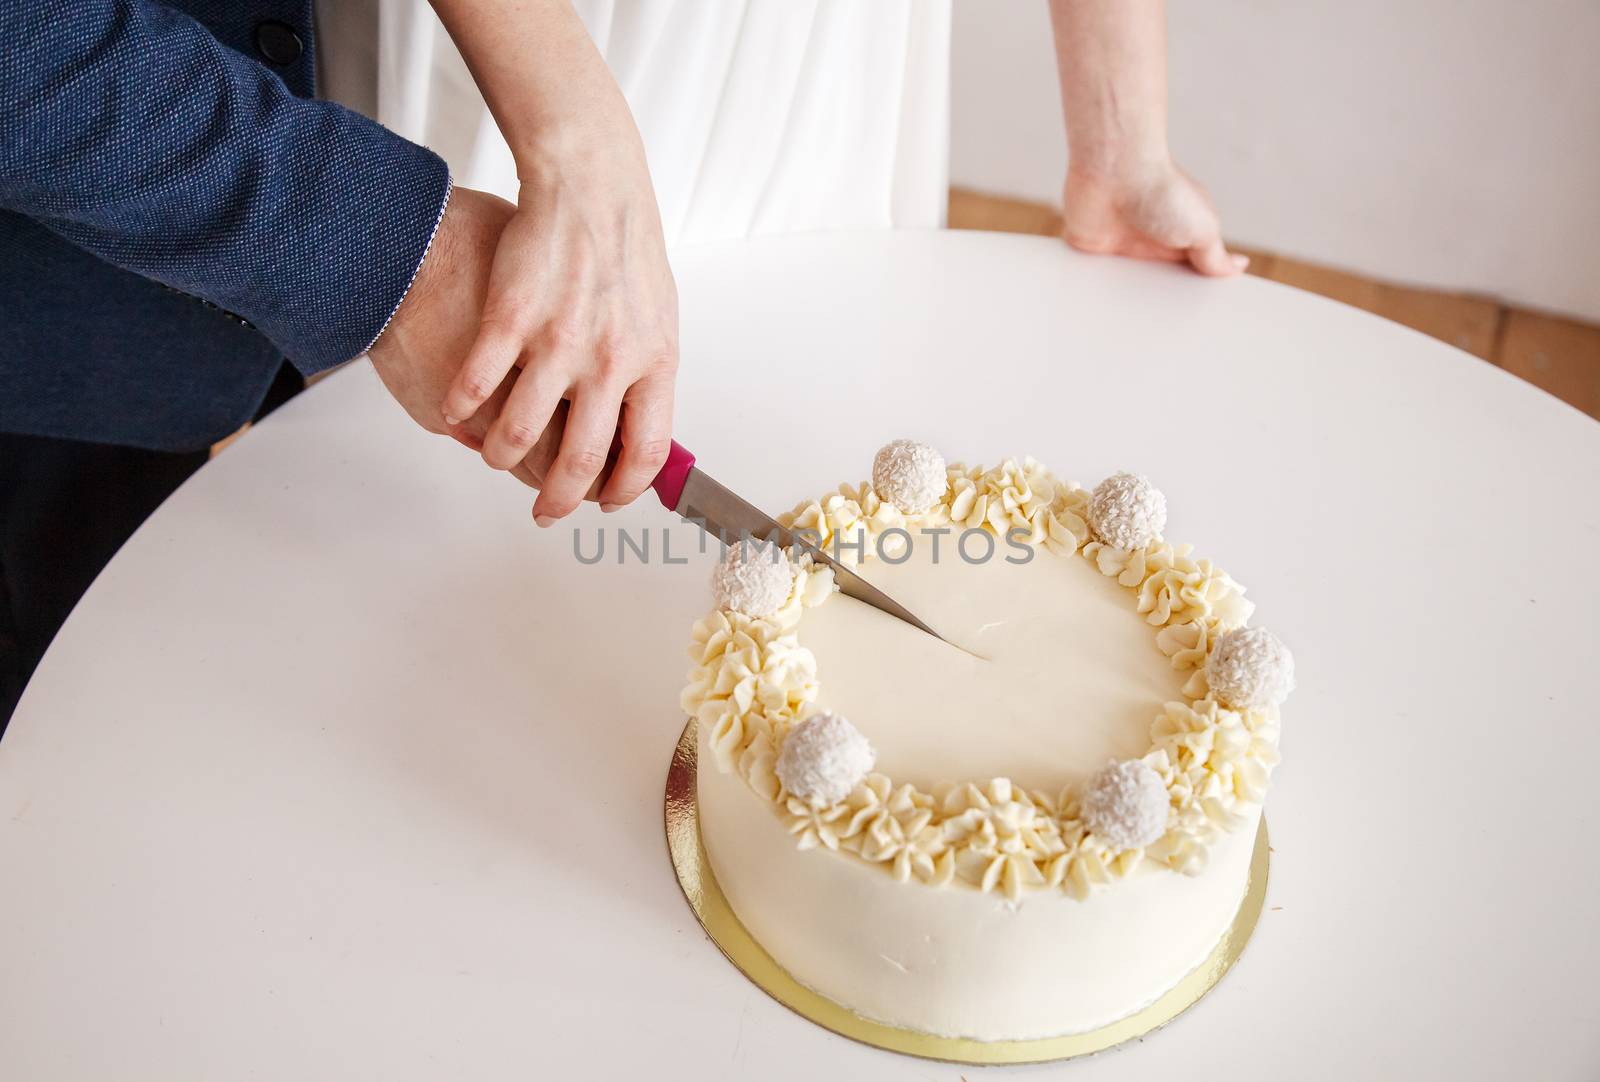 newlyweds cut the bridal cake. hands closeup